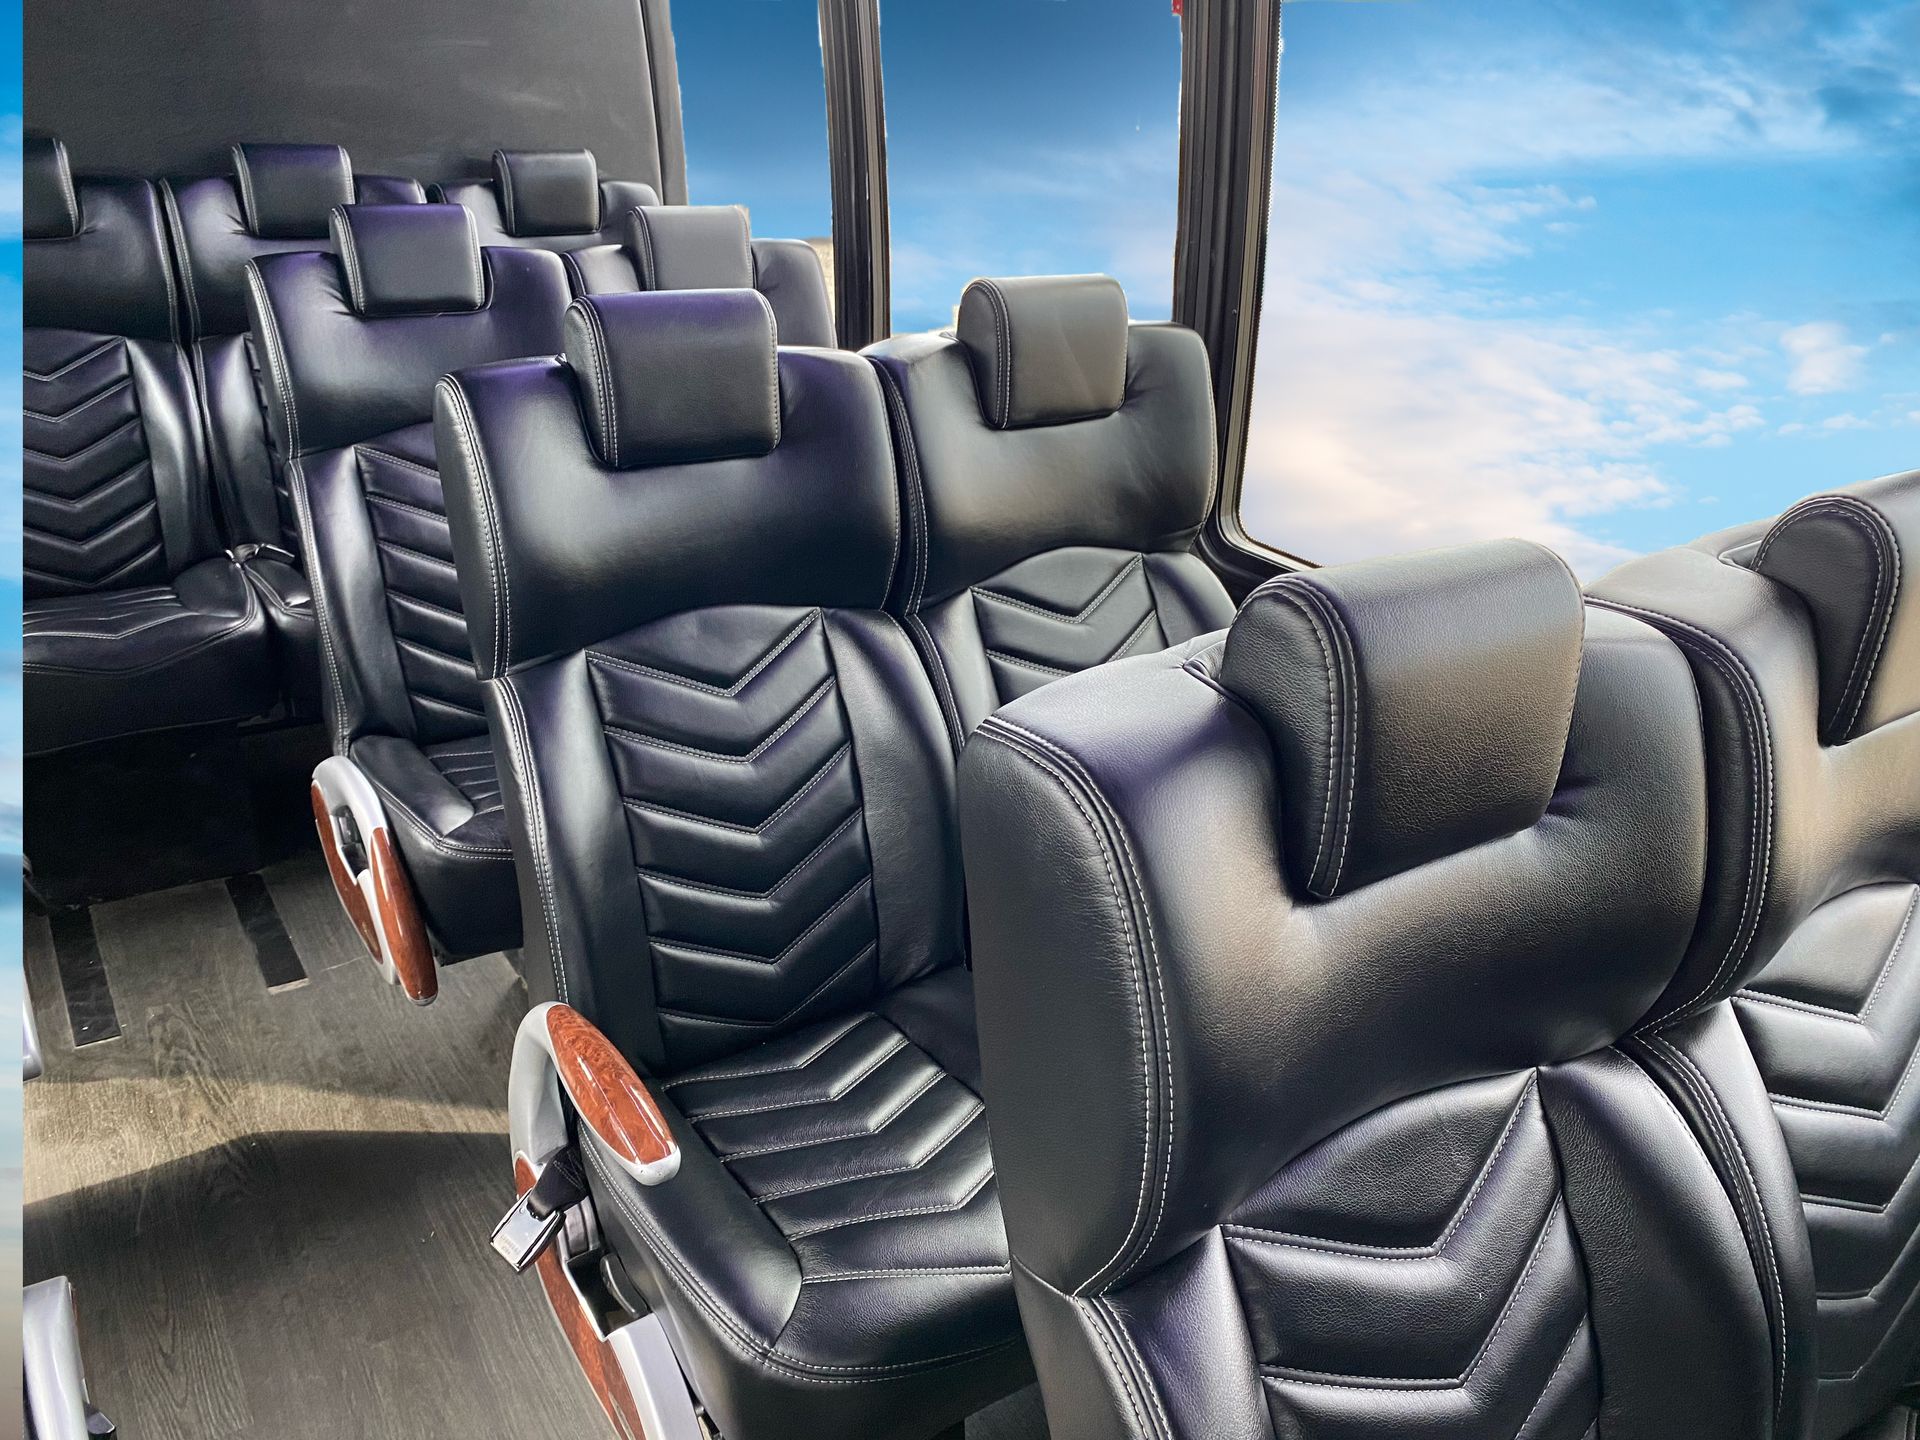 Limo-To-Go-Grech-Executive-shuttle-bus-interior-plush-seating